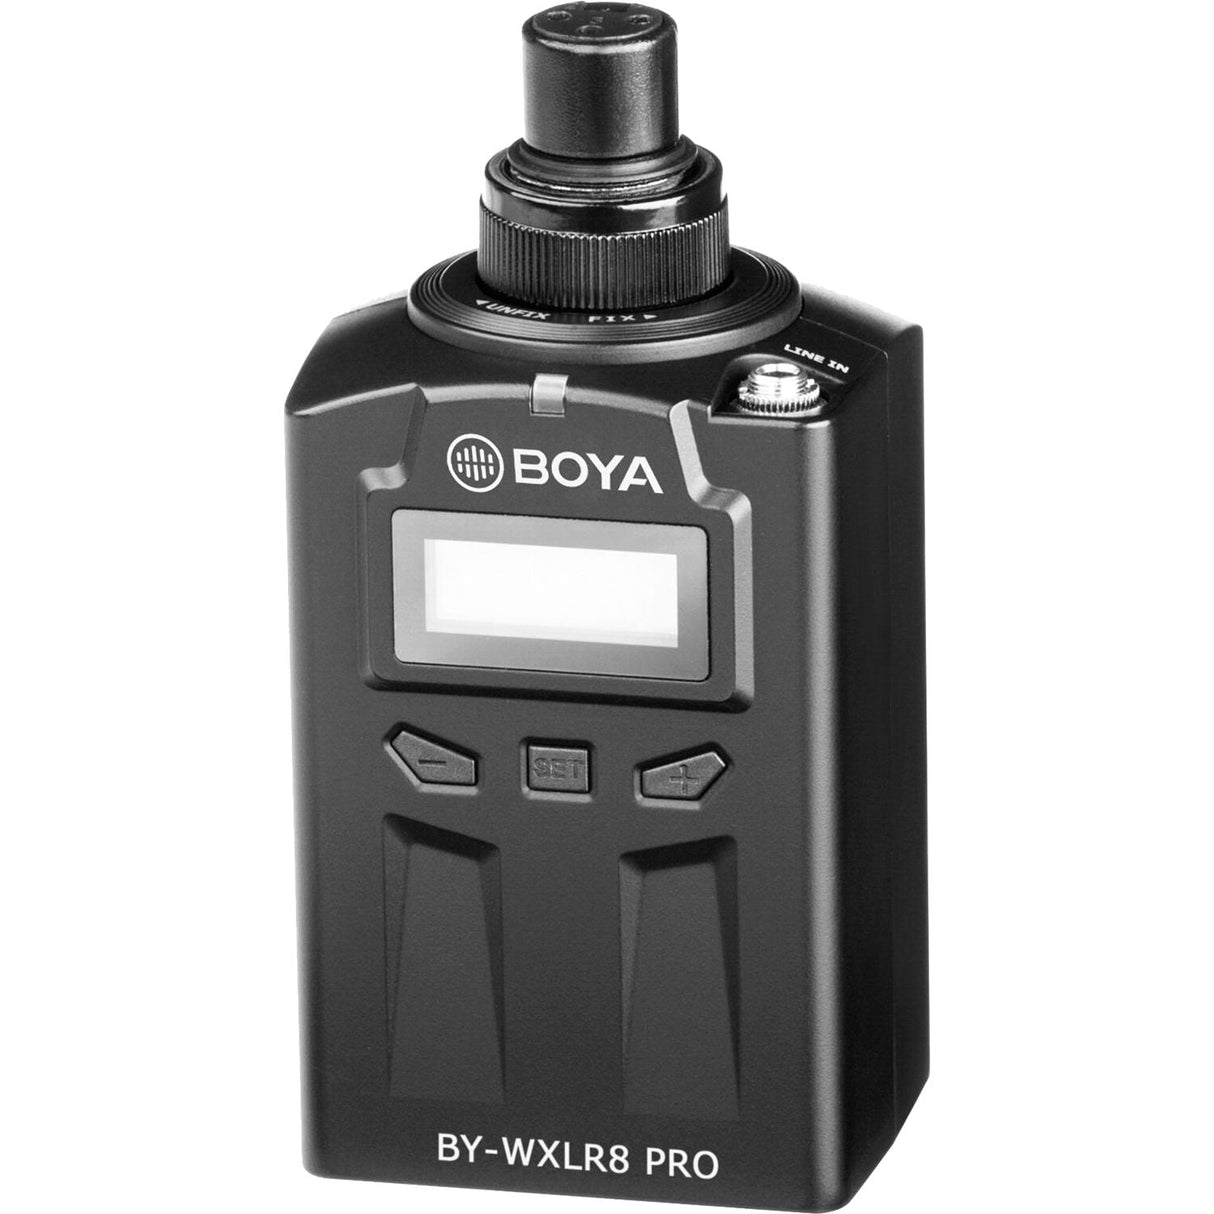 BOYA BY-WXLR8 PRO XLR Transmitter for BY-WM8 Pro System